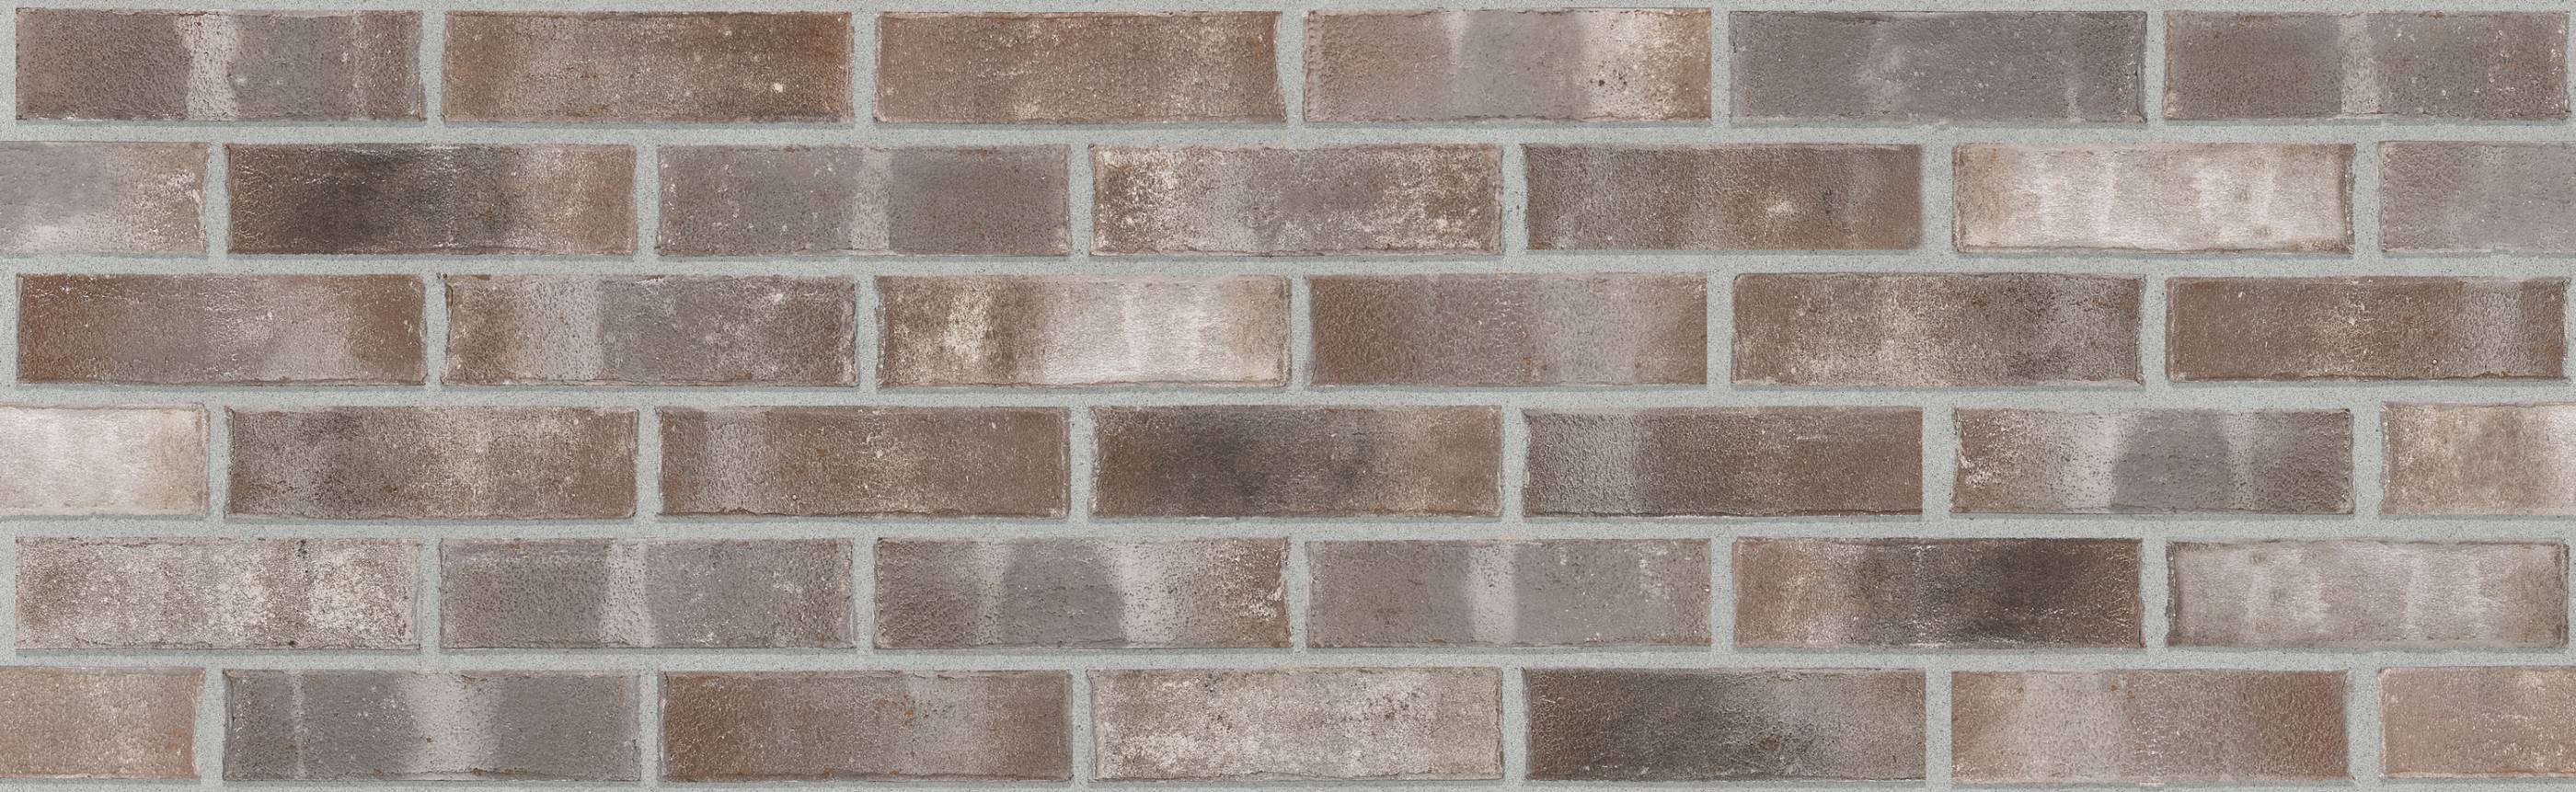 Floren Castor Clay Brick 